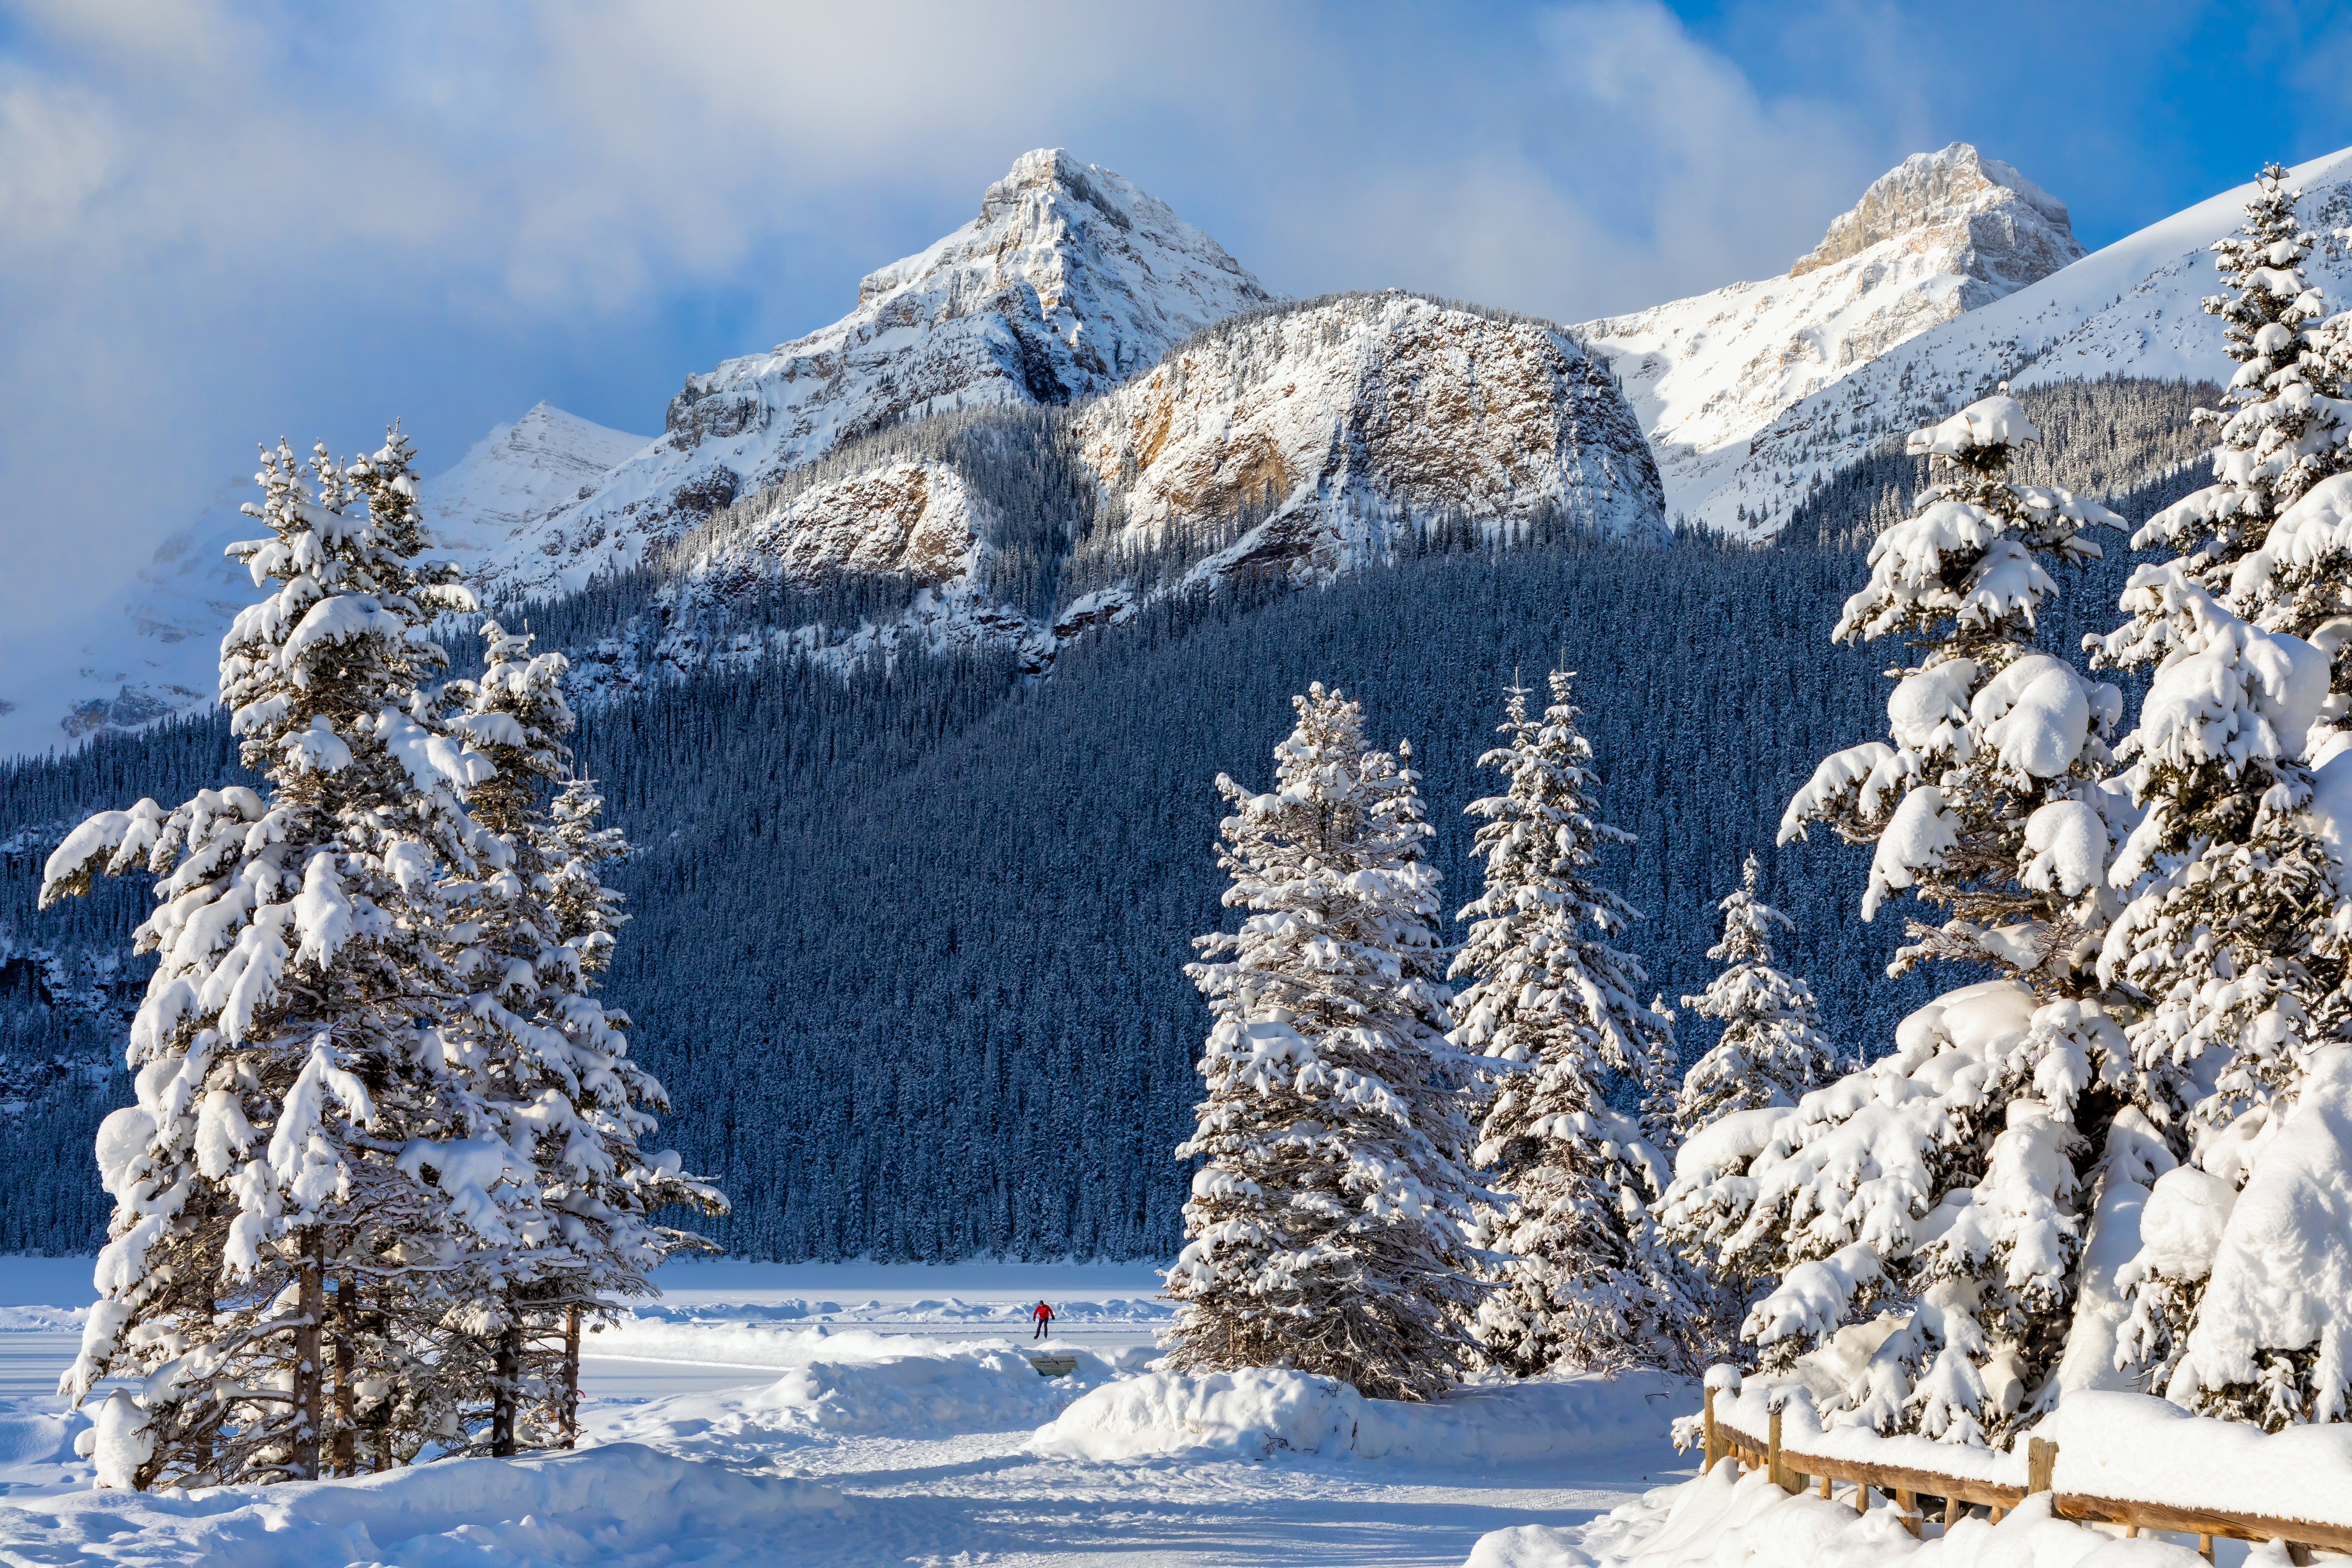 Snow is beautiful. Канада Банф зима. Национальный парк Банф лес. Национальный парк Банф в Канаде зима. Горы зима.